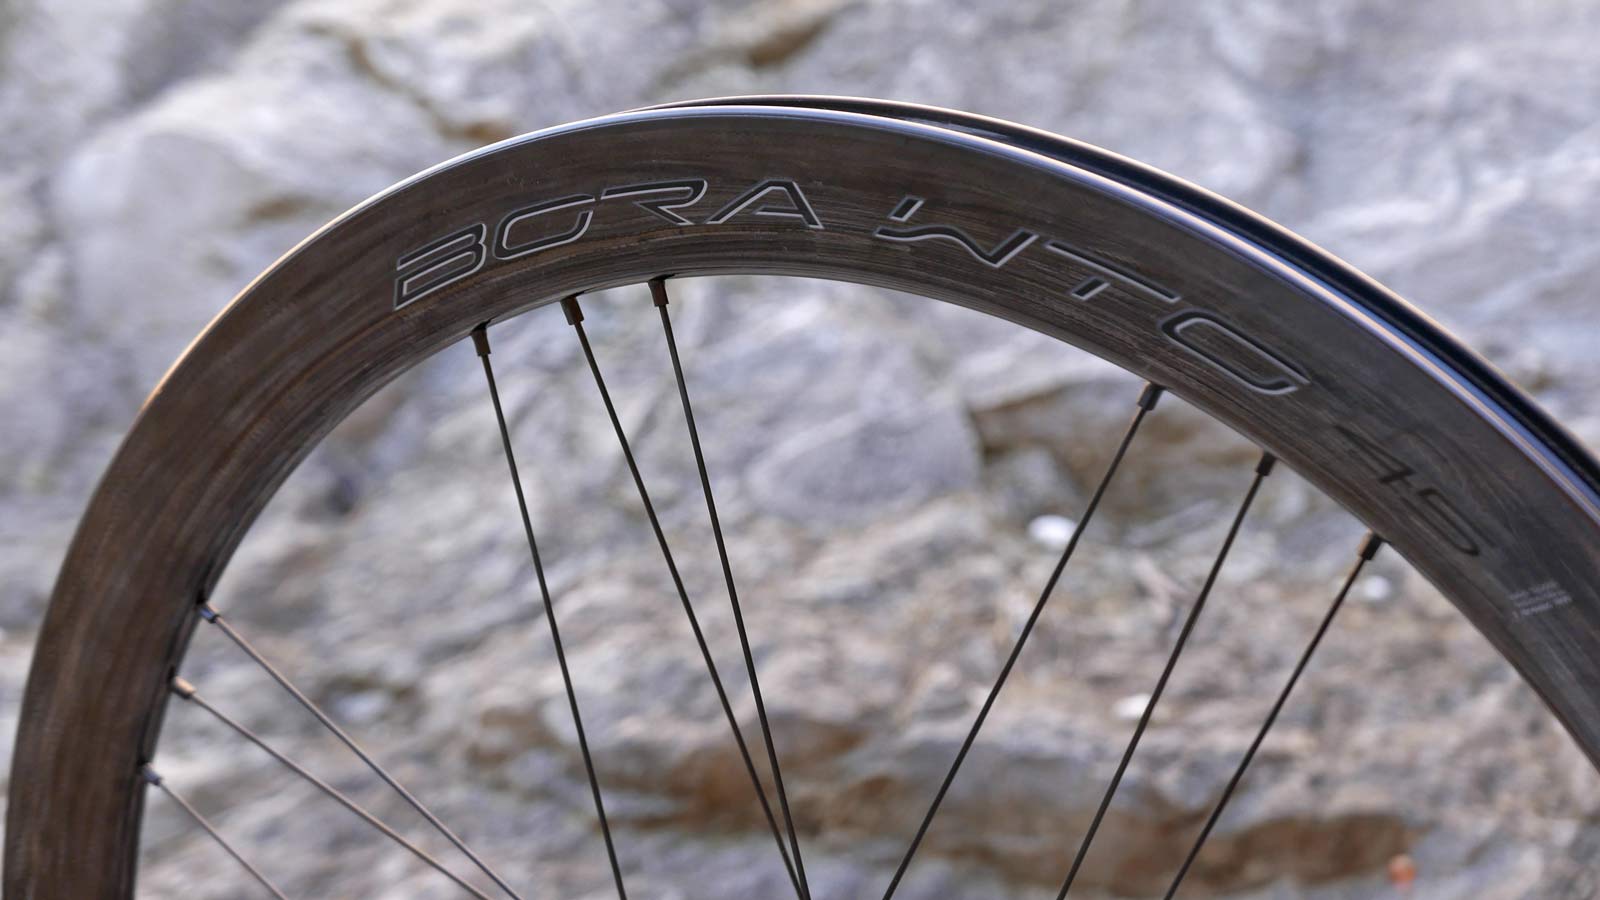 Campy Bora WTO 45 Disc aero road tubeless carbon disc brake road bike wheels